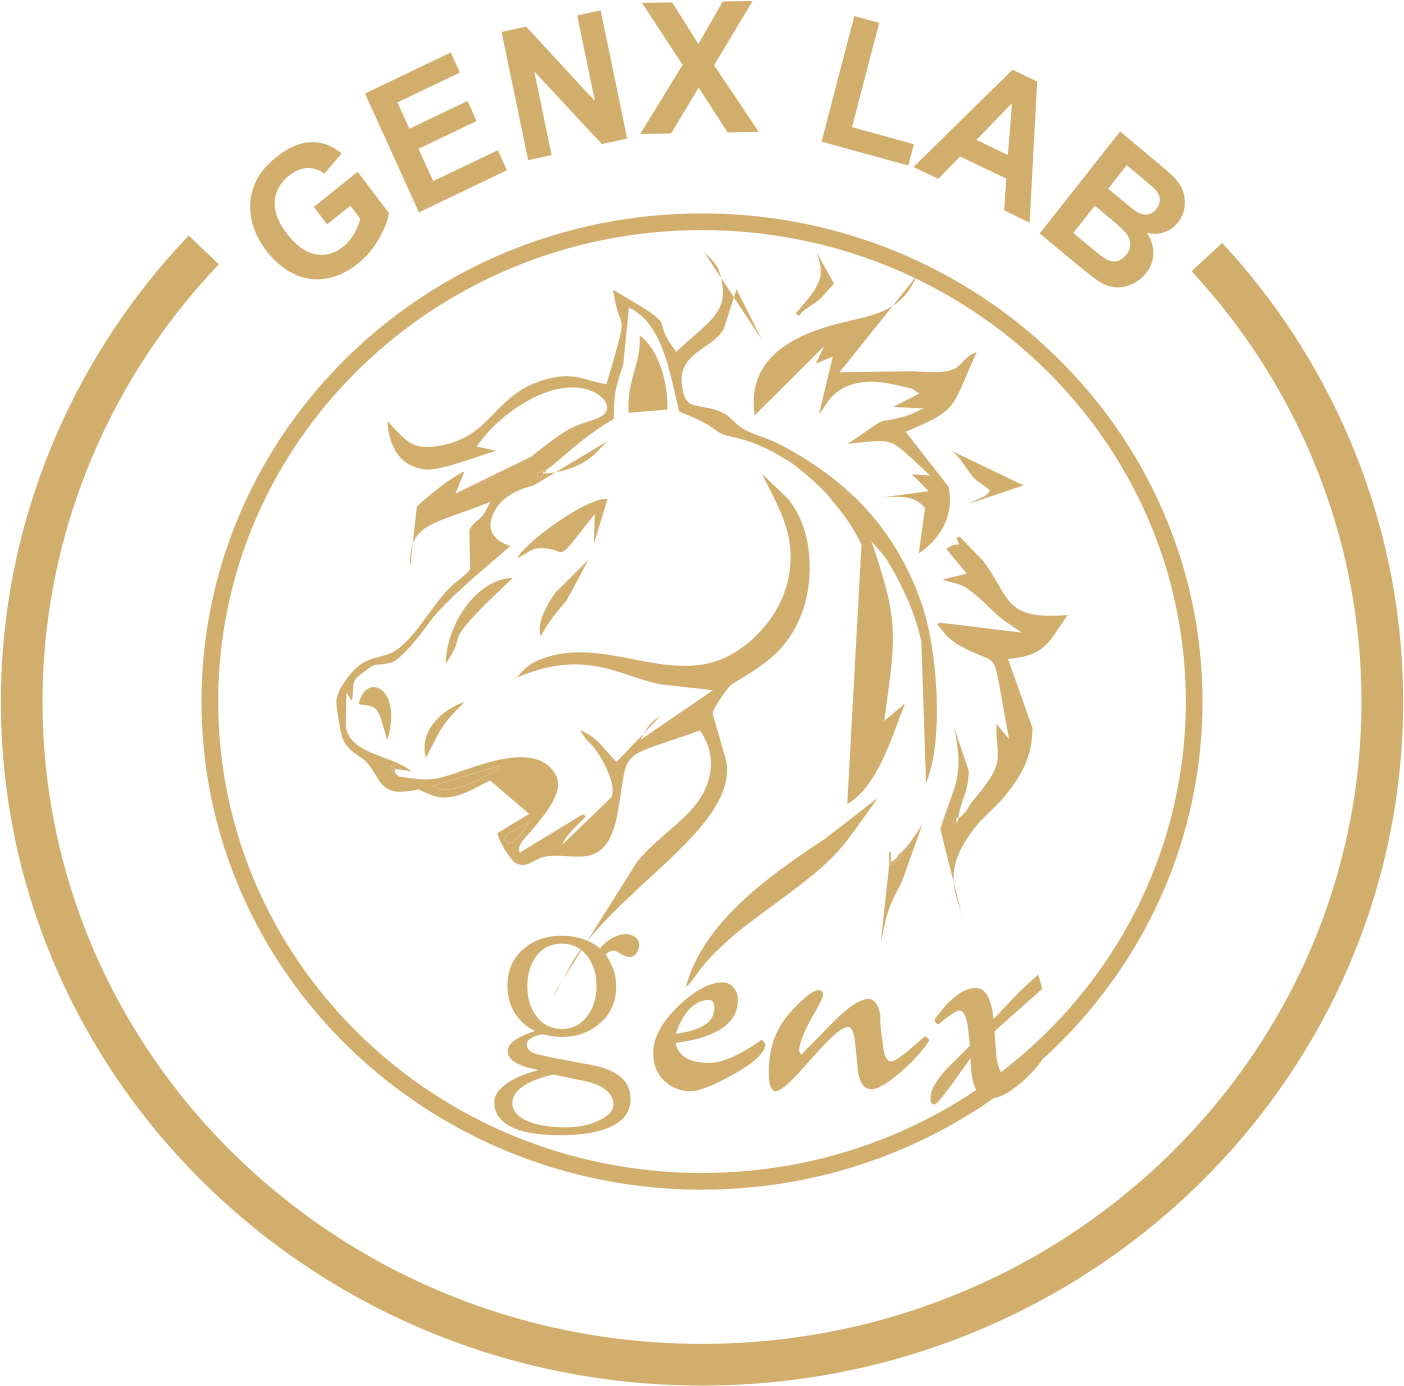 Genx Lab